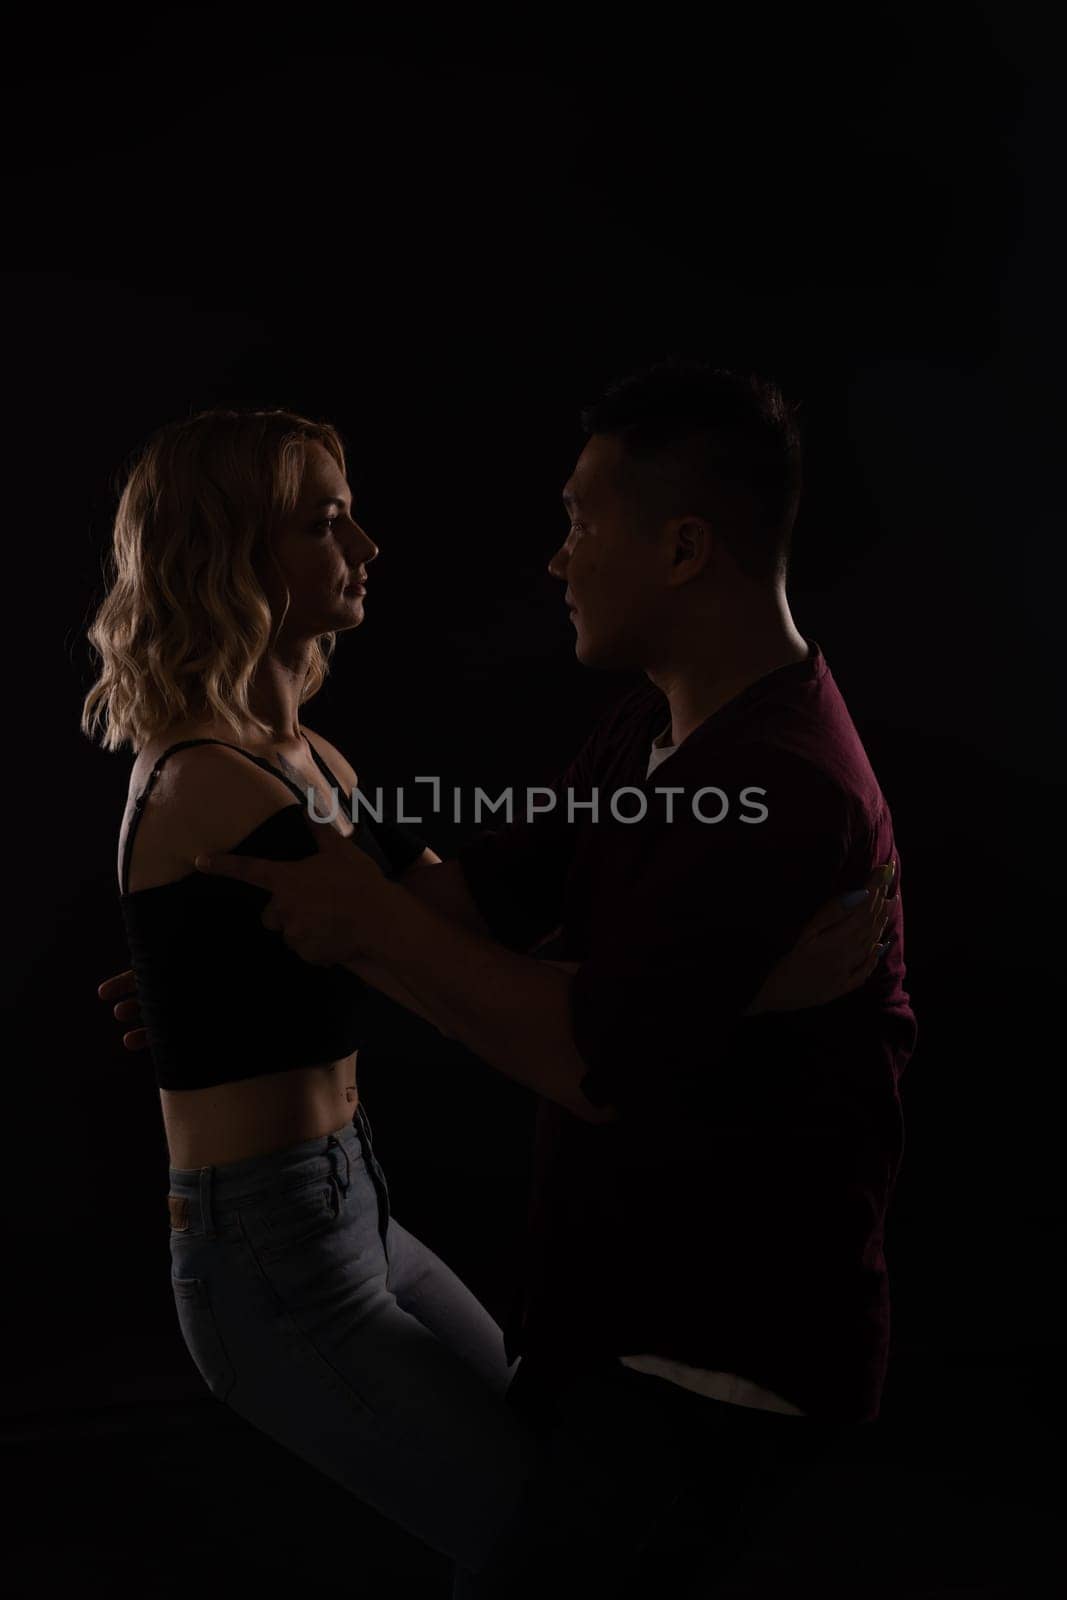 Man and woman dancers in dark